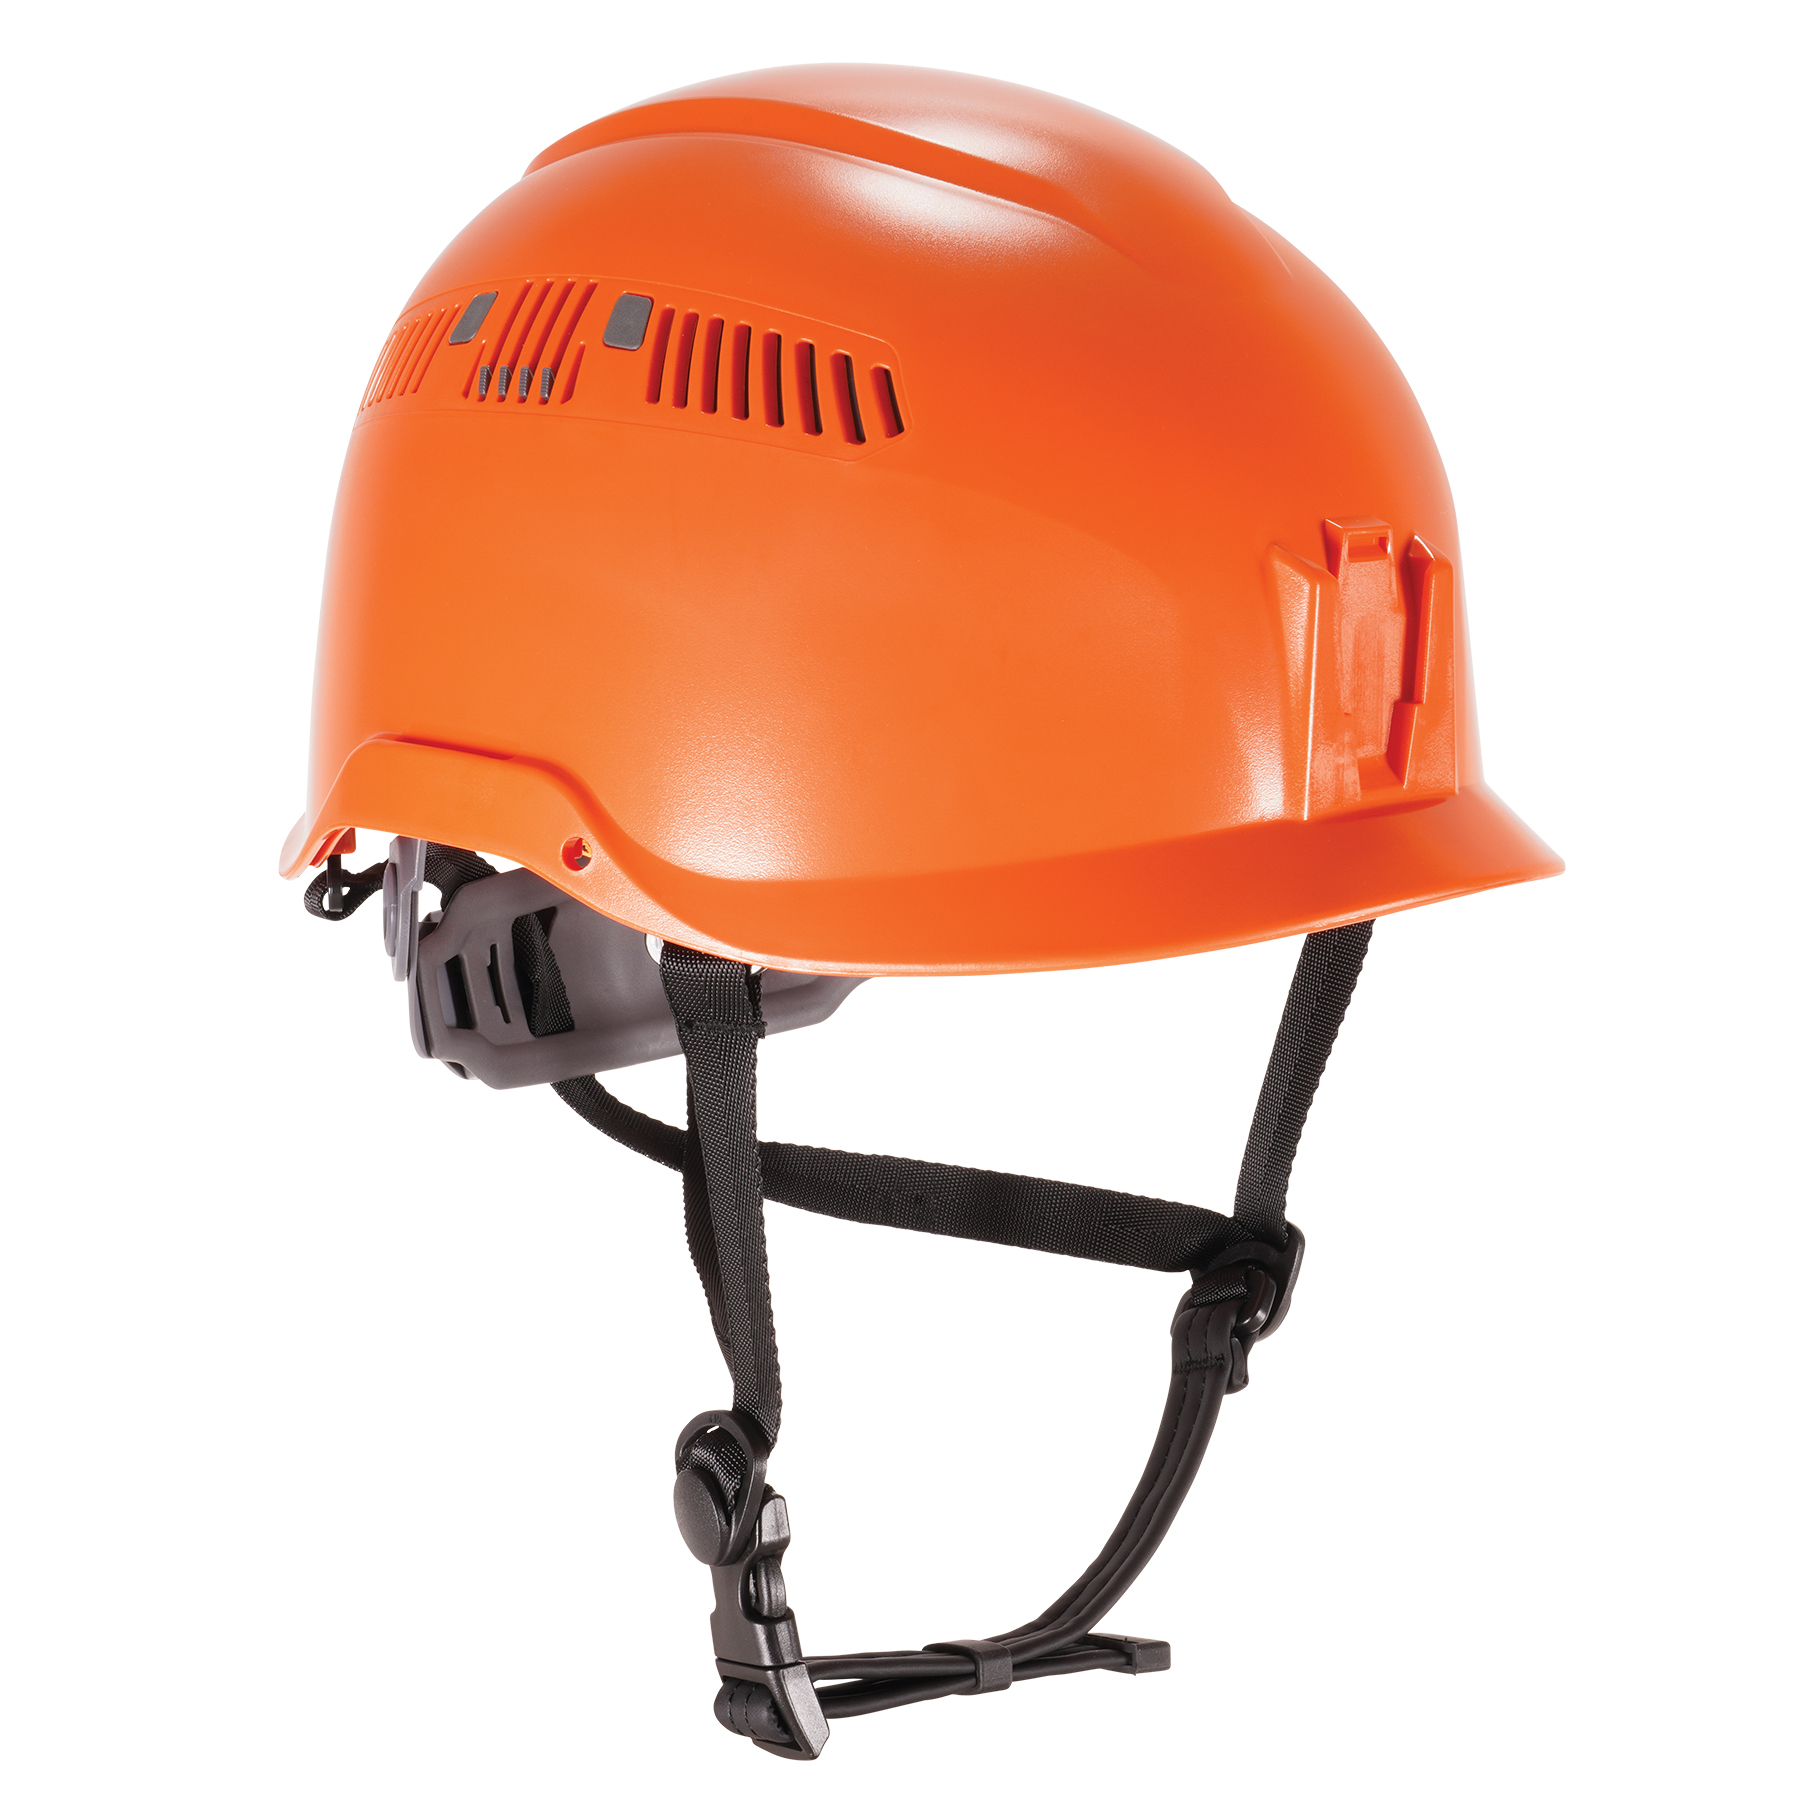 Ergodyne Skullerz 8975 Class C Safety Helmet from Columbia Safety